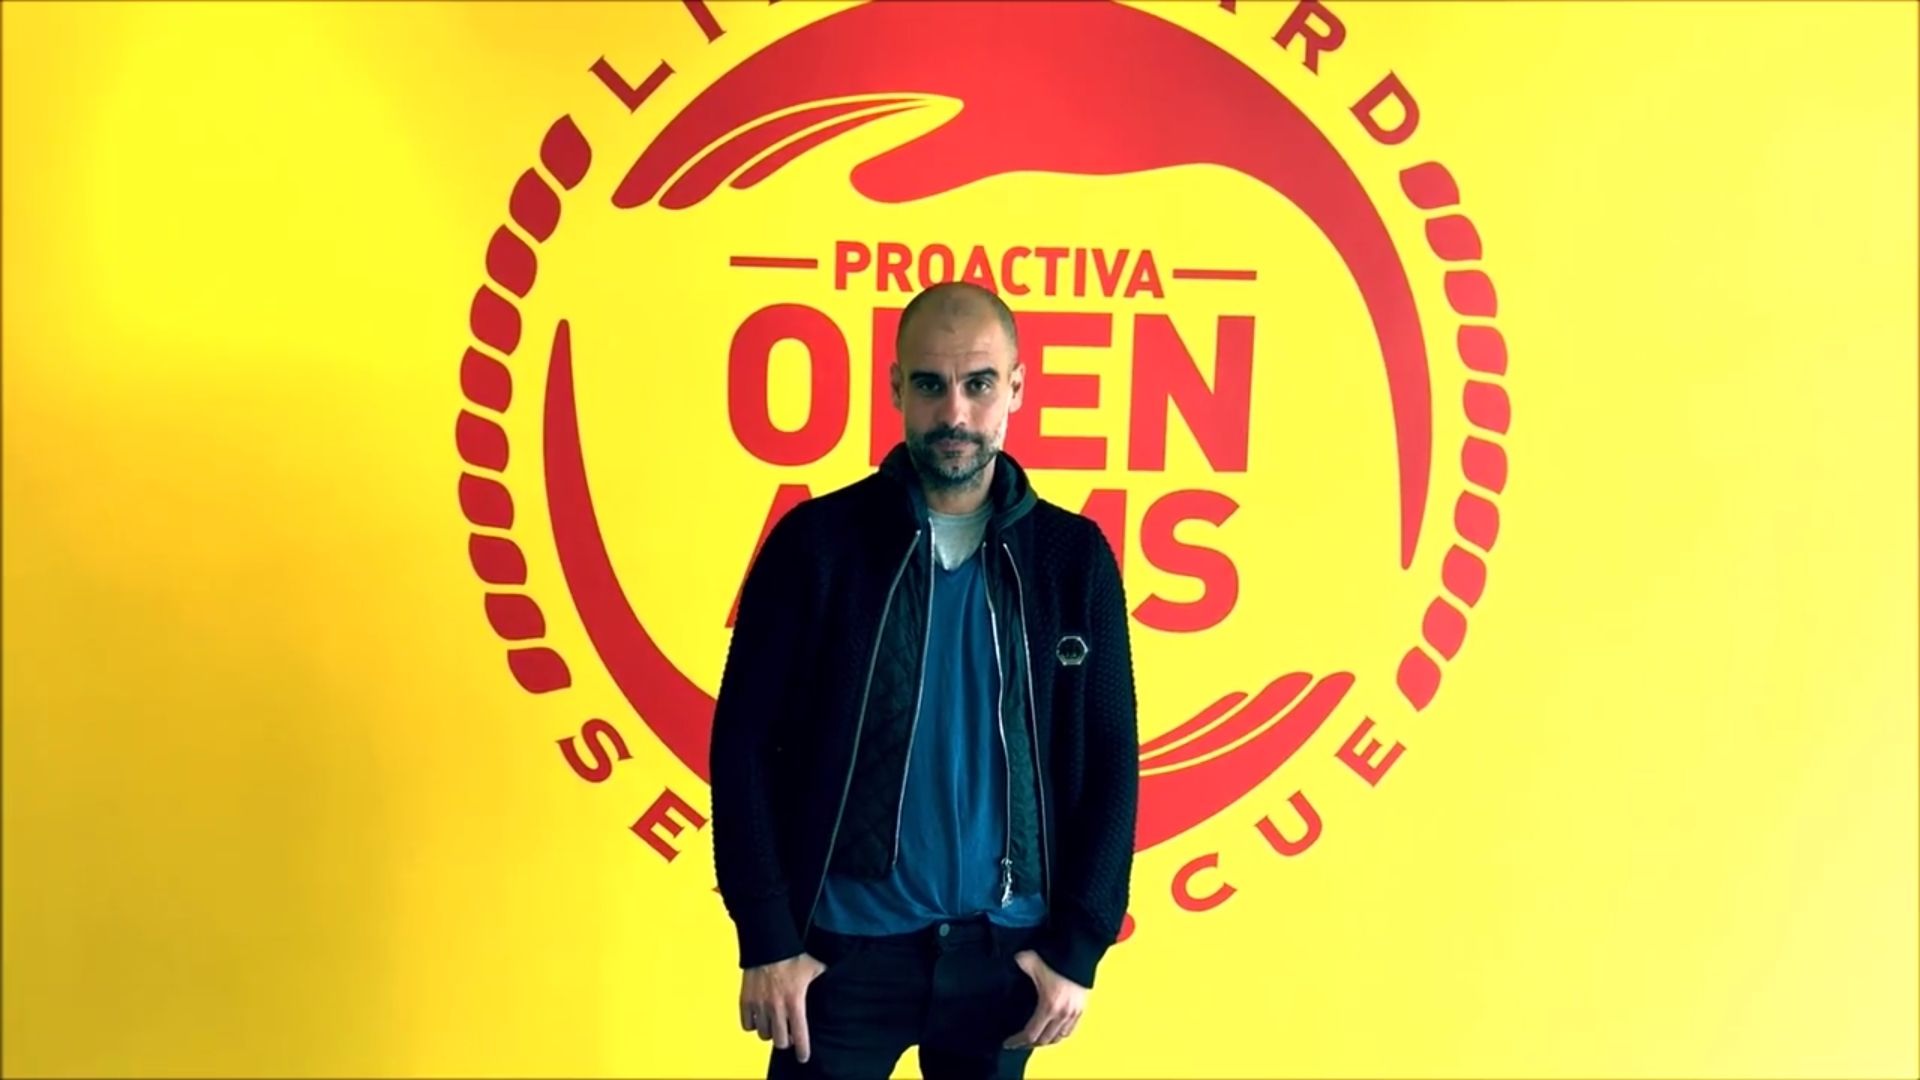 Pep Guardiola dóna suport a la feina de Proactiva Open Arms